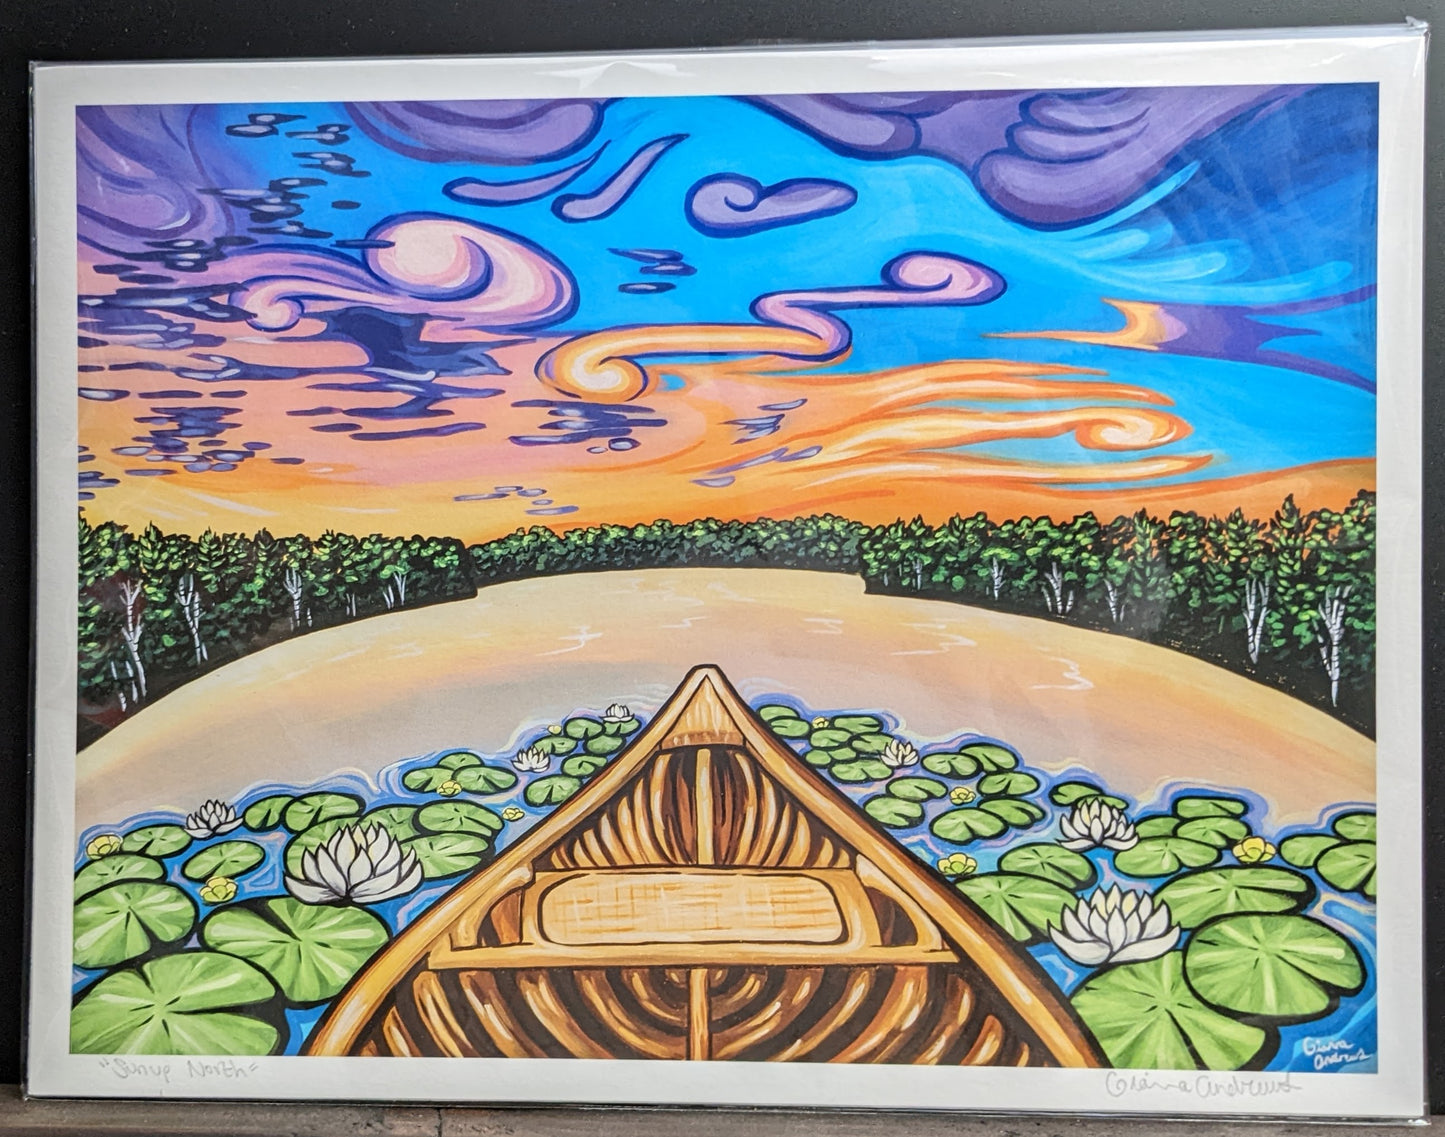 Sunup North canoe on lilypad lake scene art print by Gianna Andrews